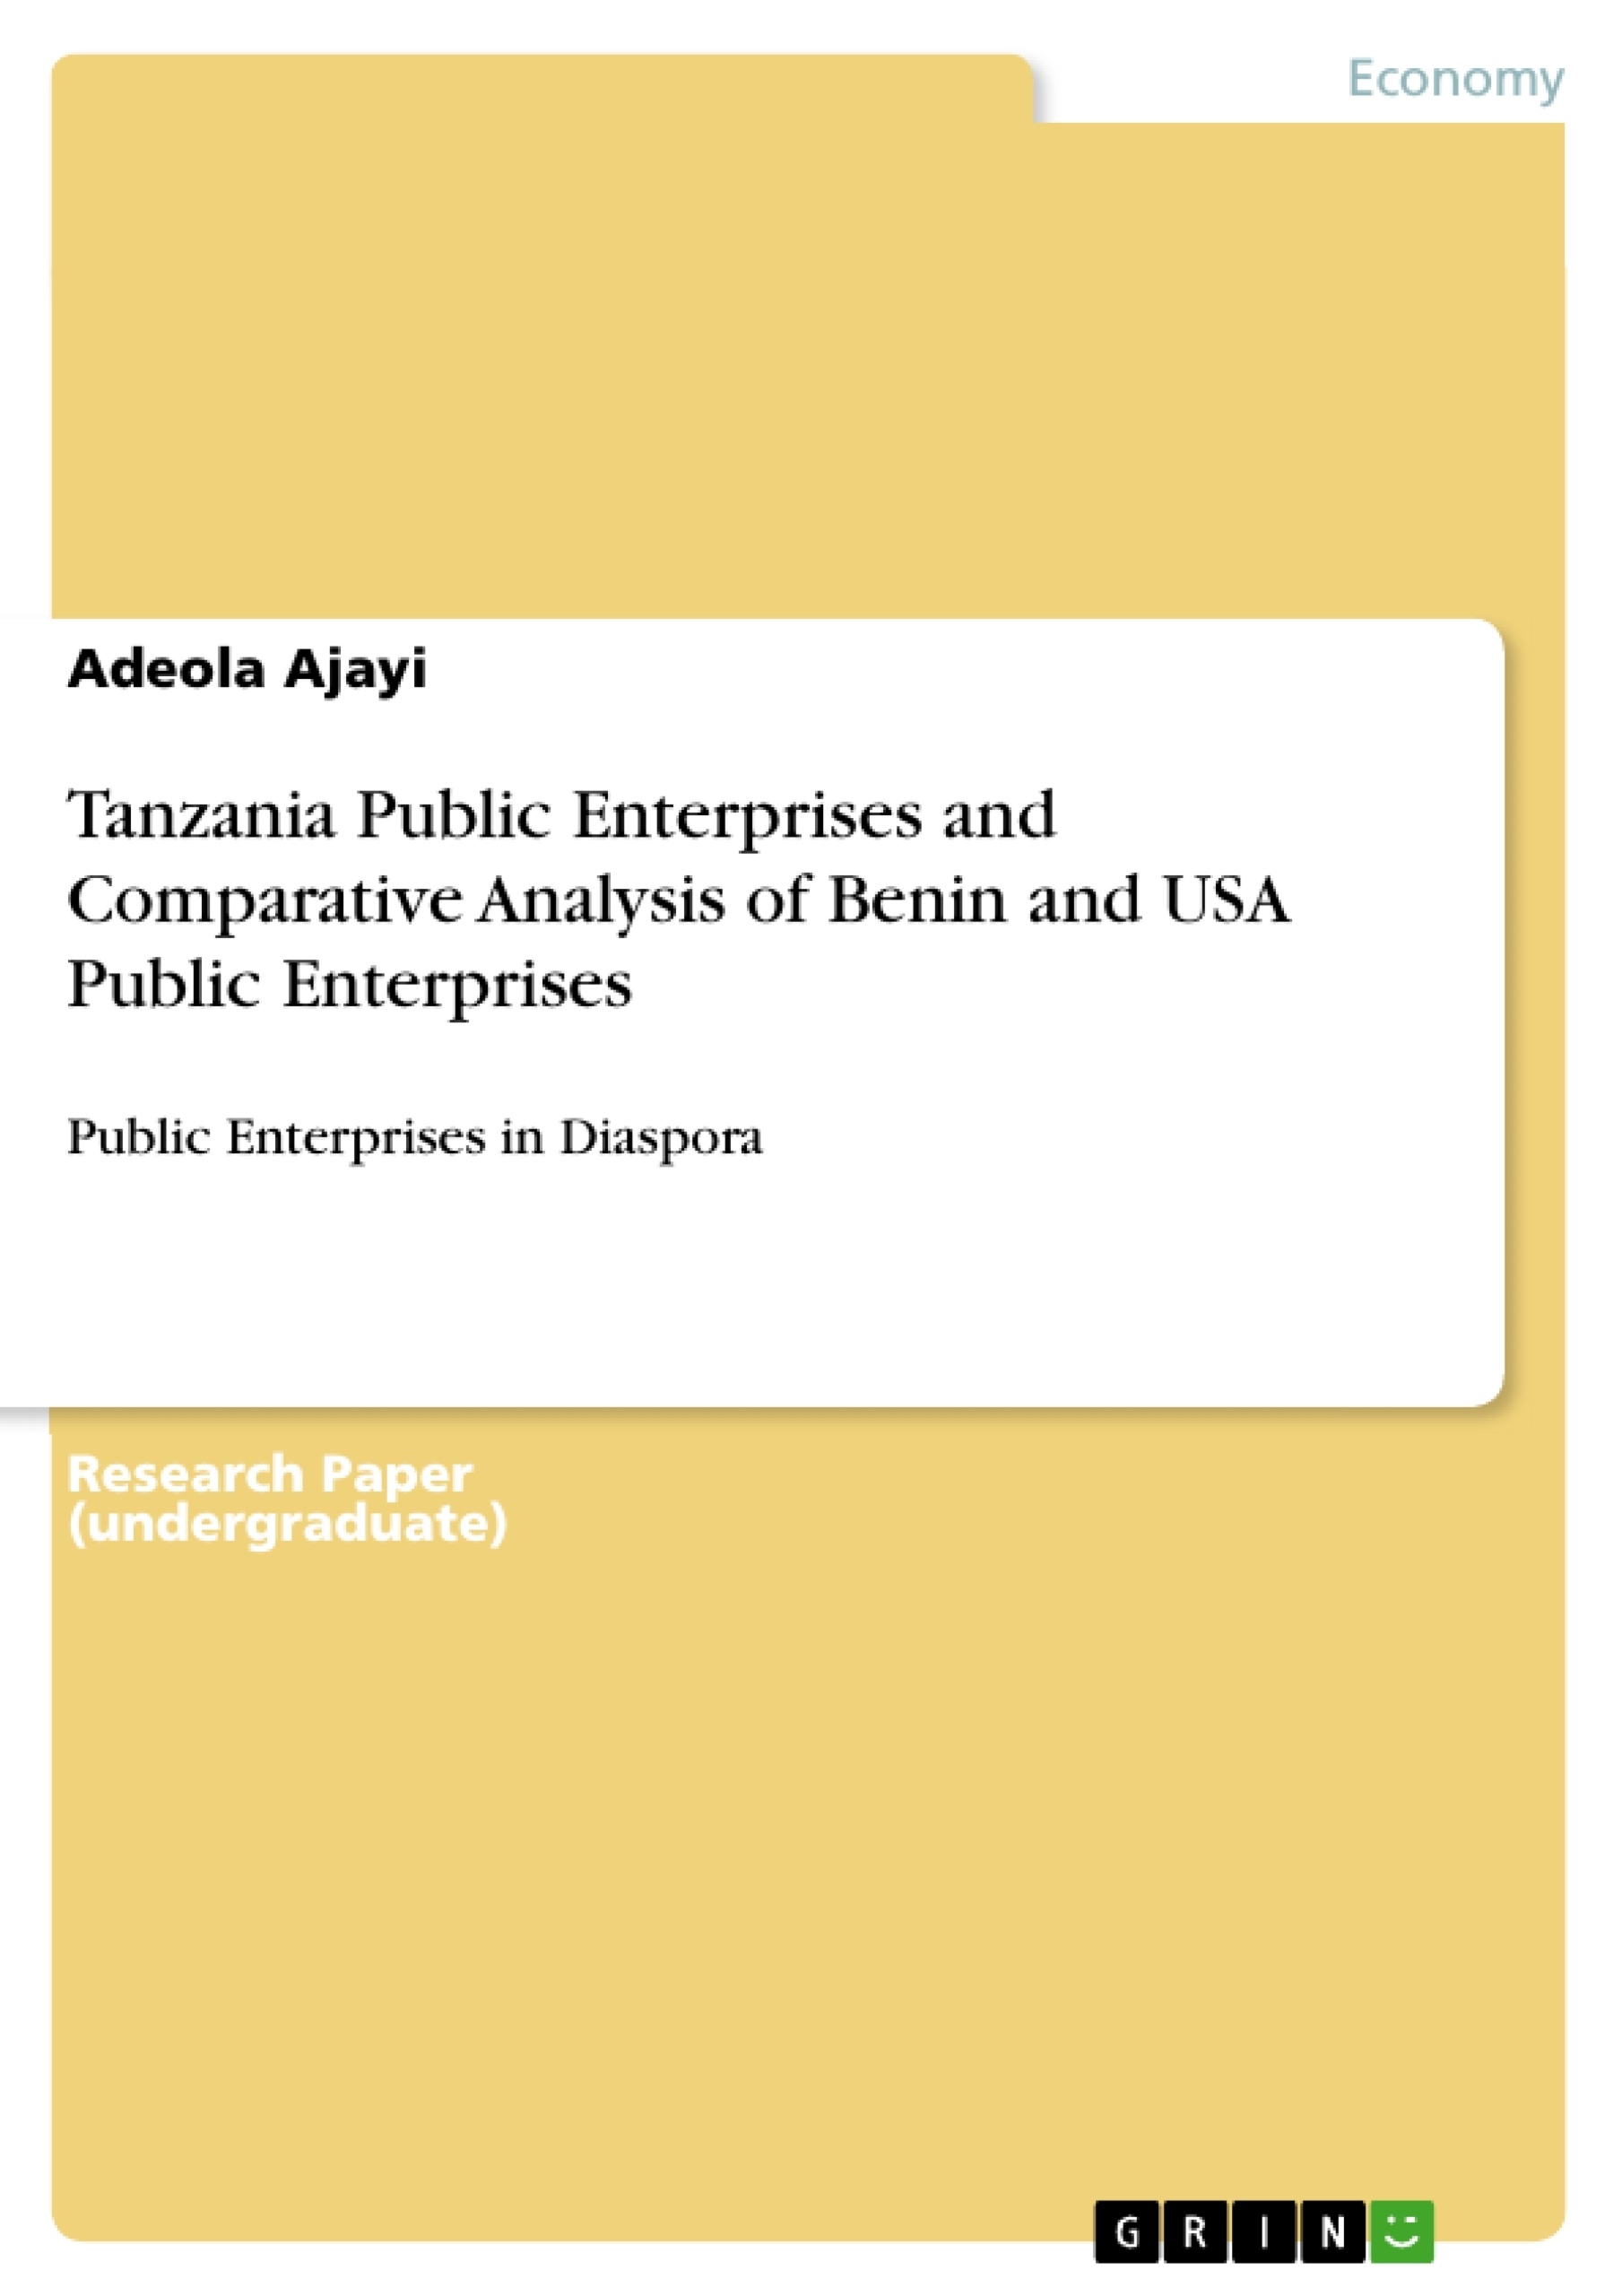 Title: Tanzania Public Enterprises and Comparative Analysis of Benin and USA Public Enterprises